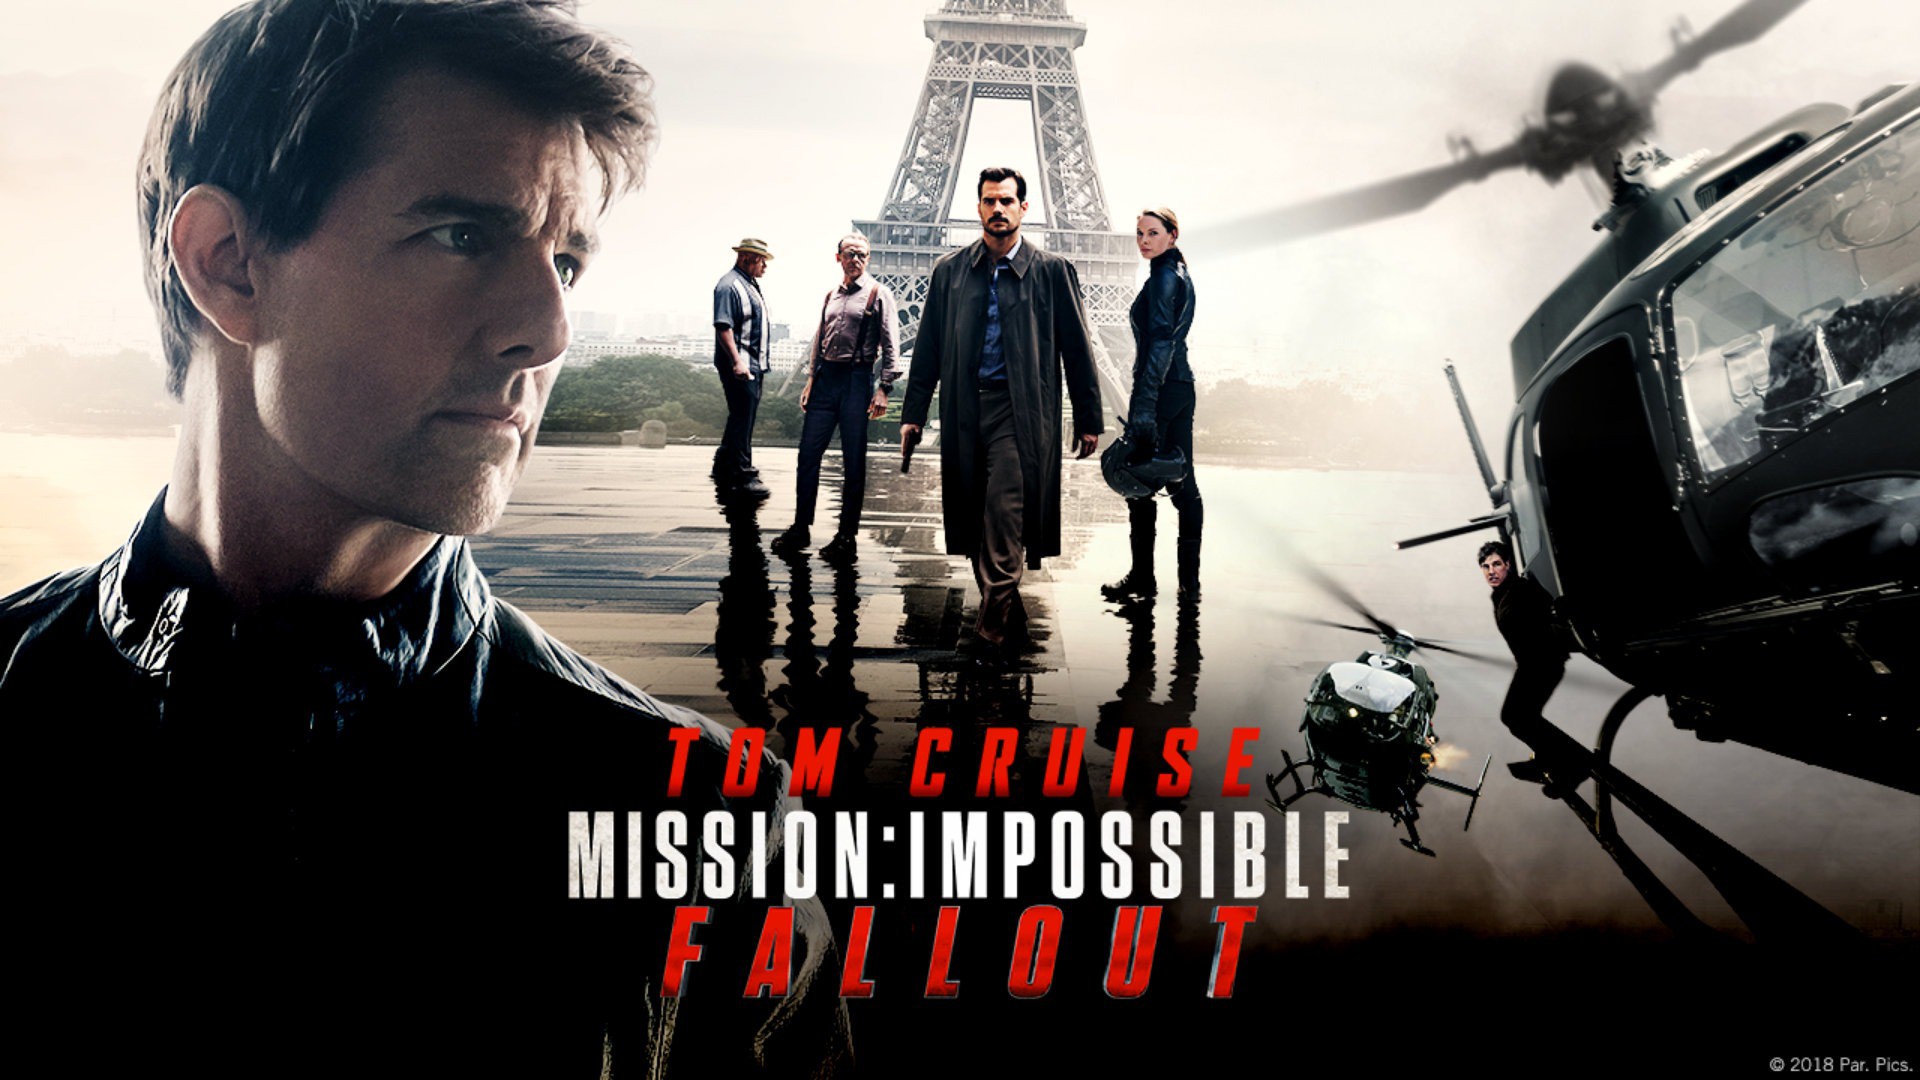 Review phim Mission Impossible - Fallout Nhiệm Vụ Bất Khả Thi - Sụp Đổ